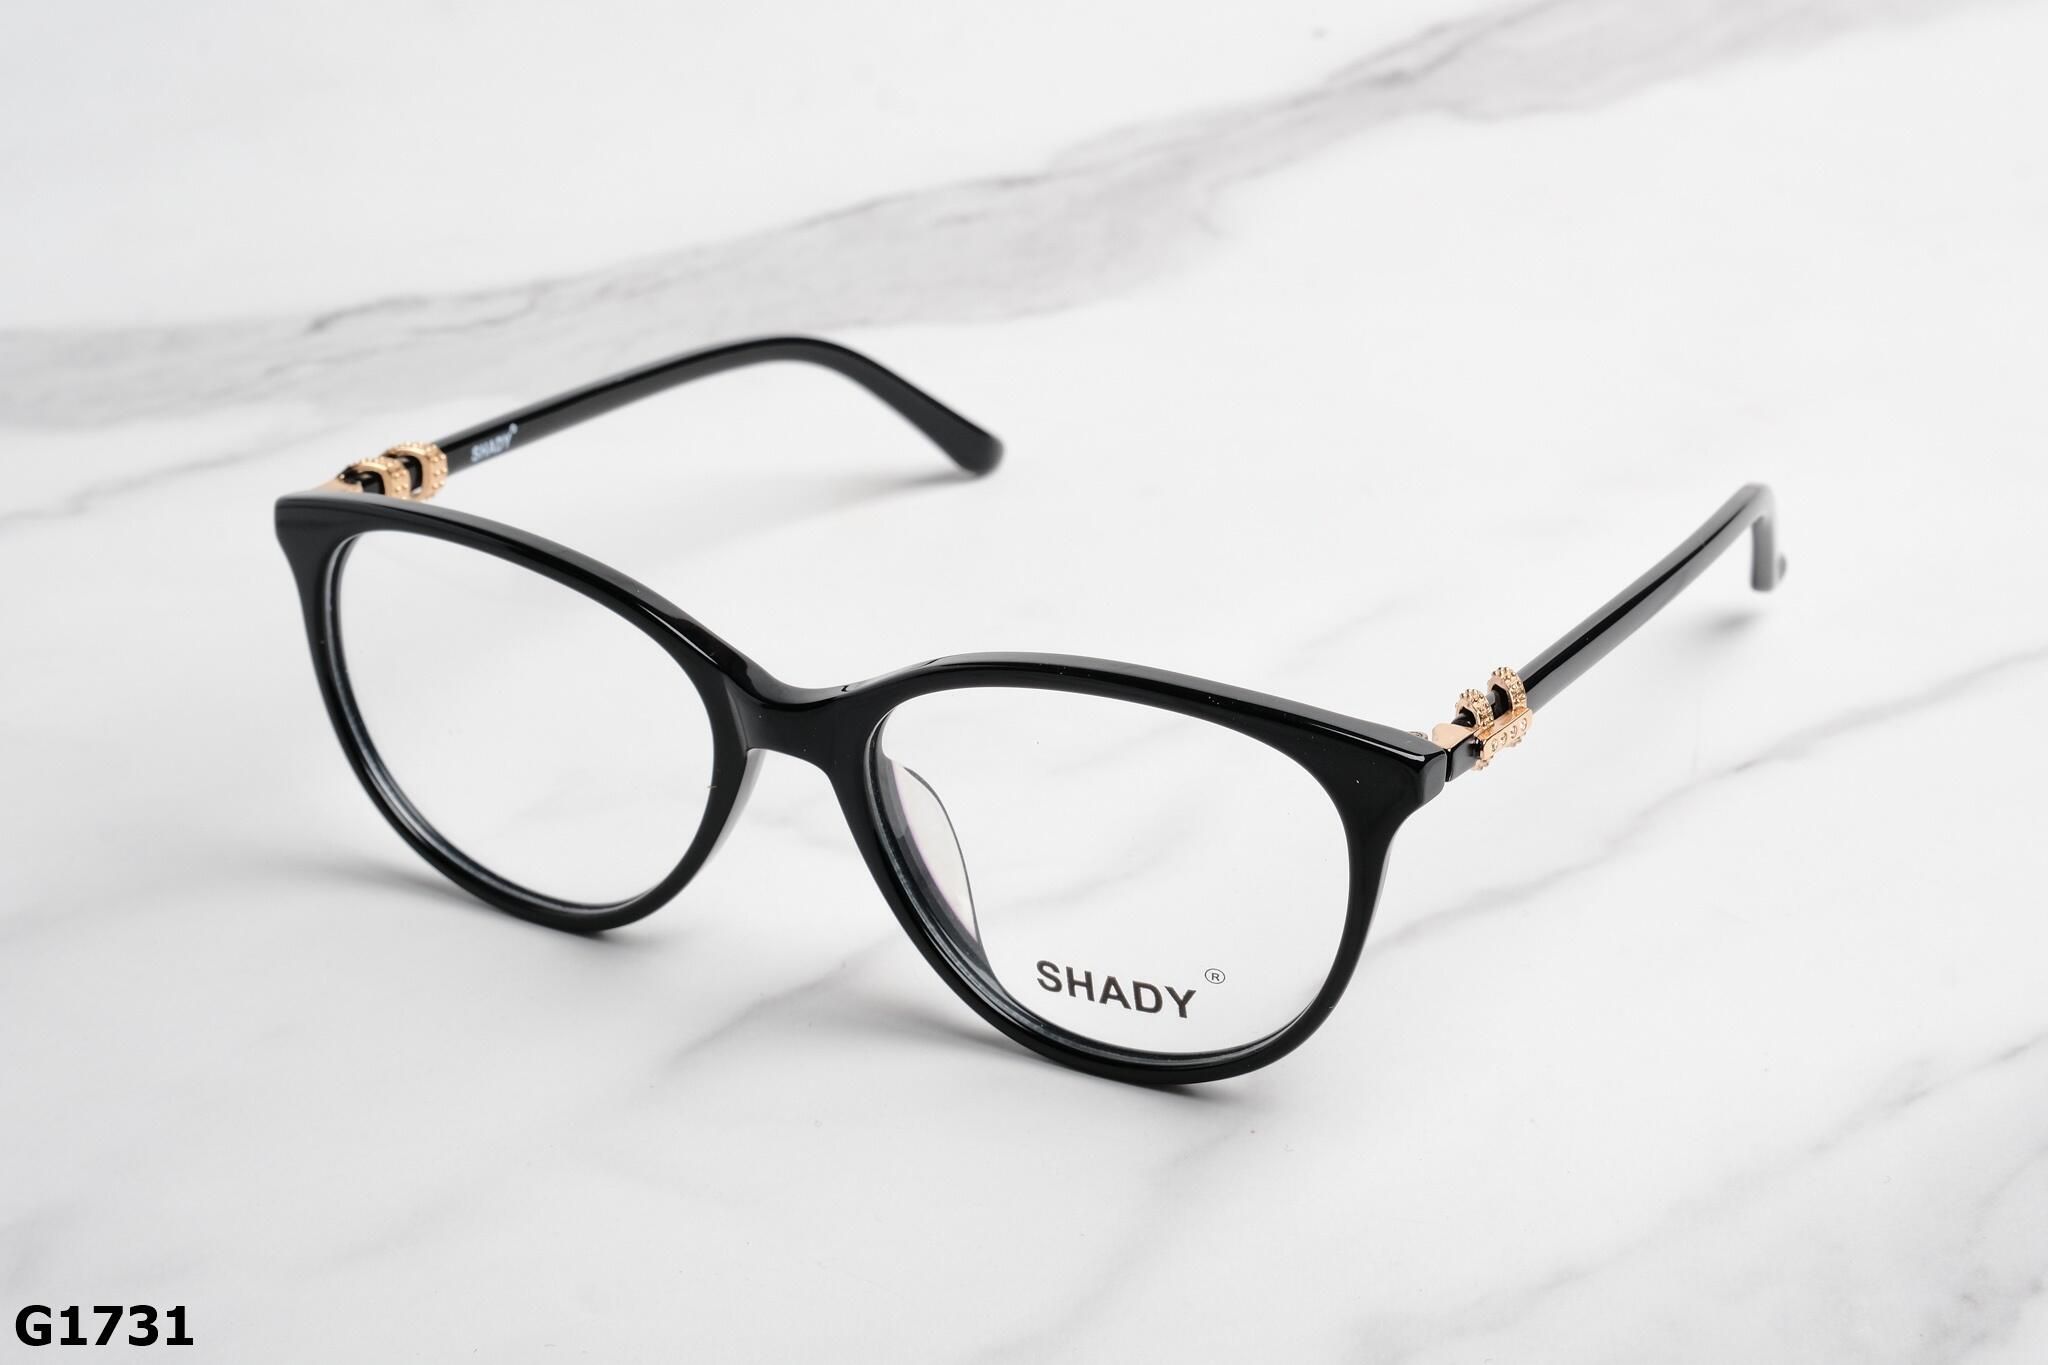  SHADY Eyewear - Glasses - G1731 